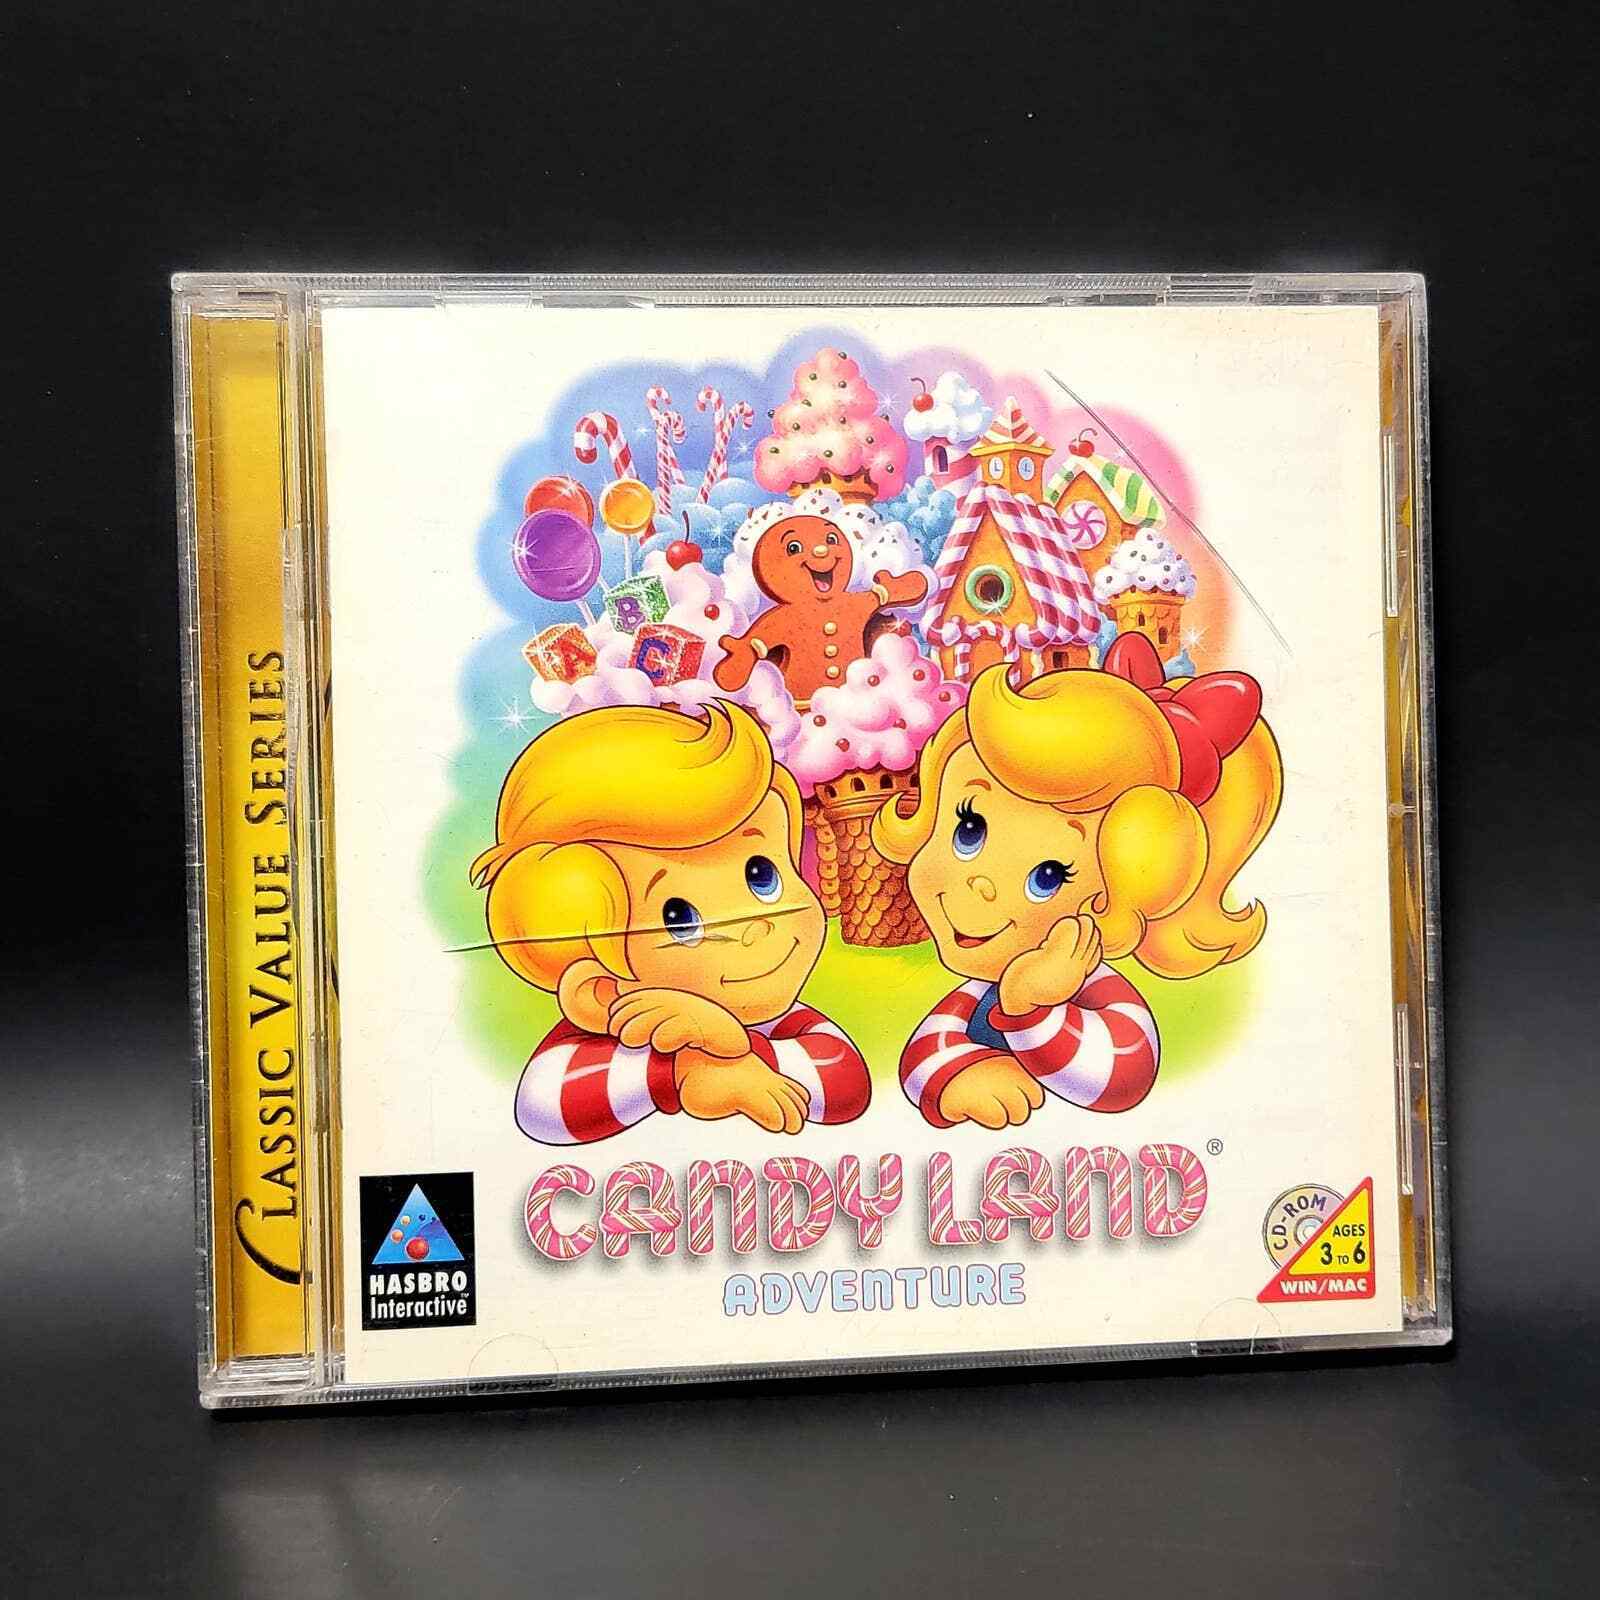 CANDY LAND Adventure PC CD-ROM Game 1998 (MAC/Windows 95)